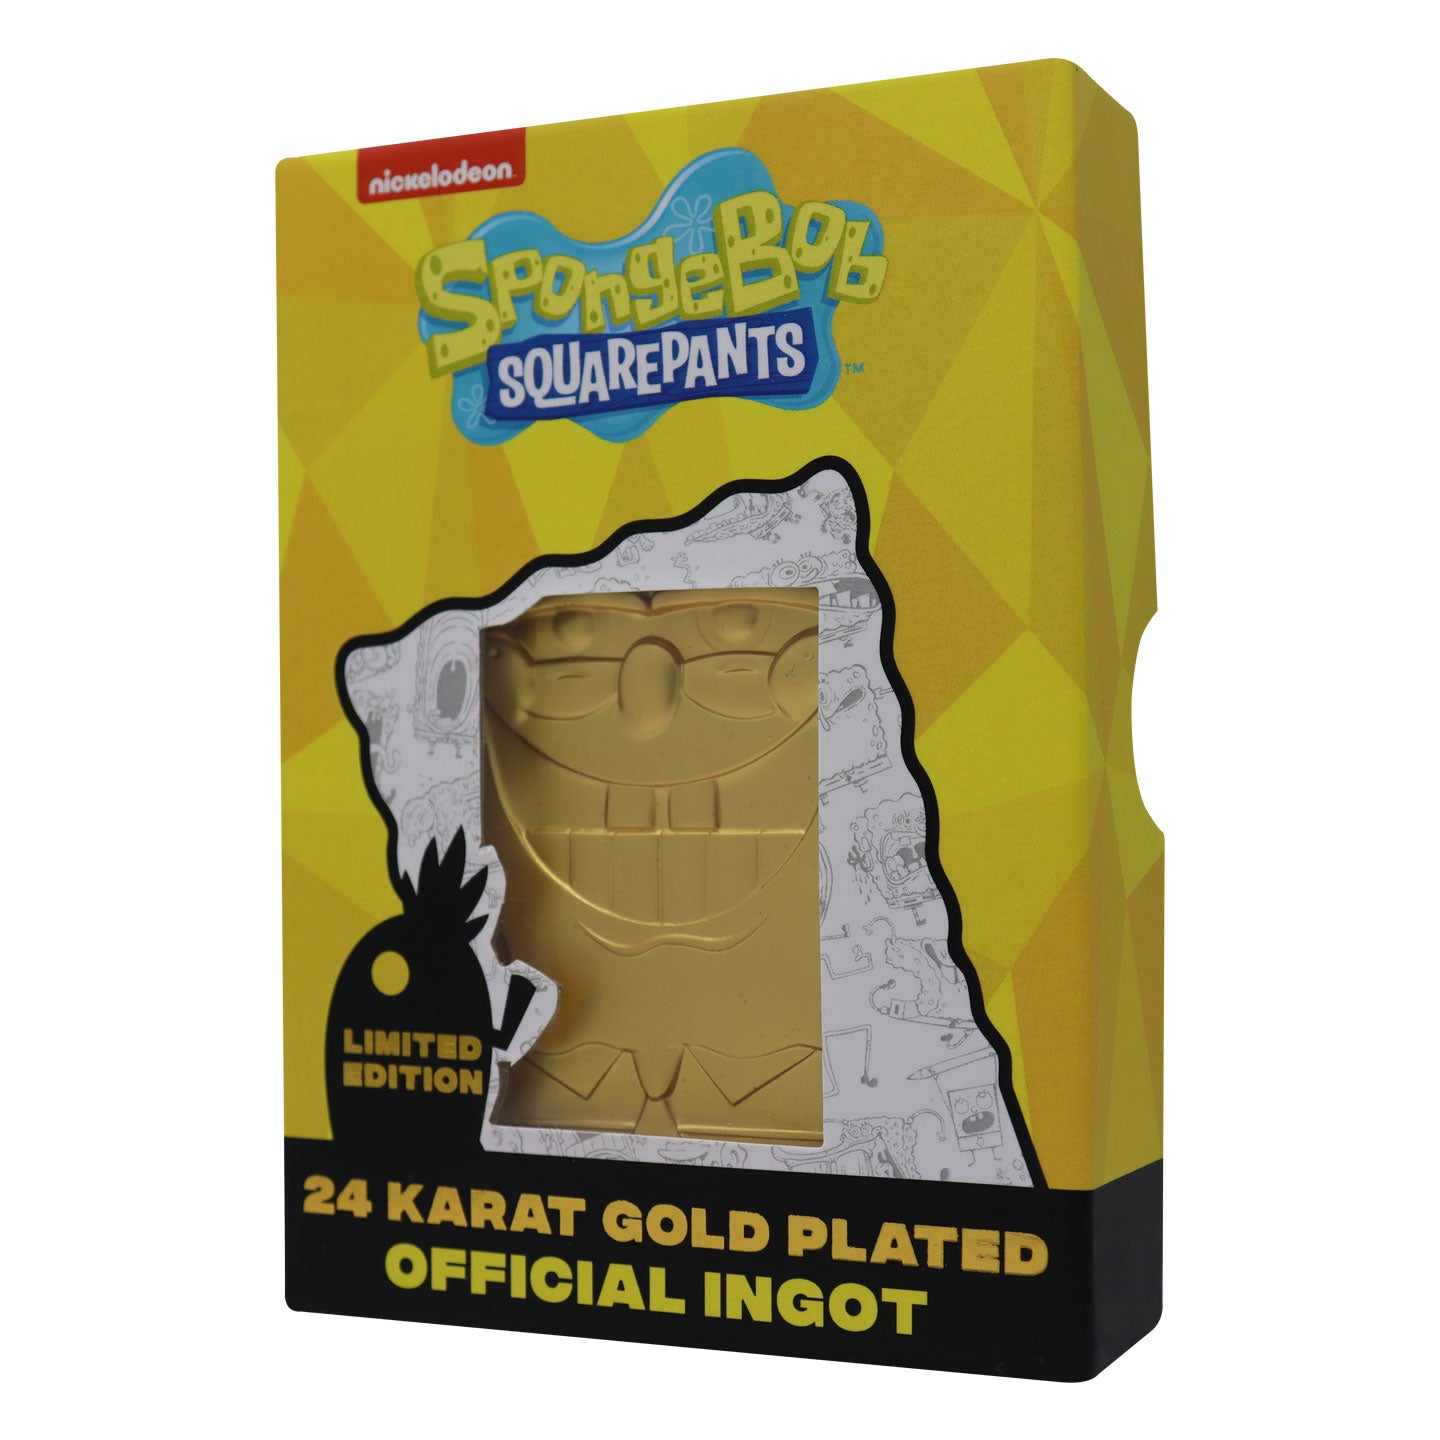 SpongeBob SquarePants 24k Gold Plated Collectible